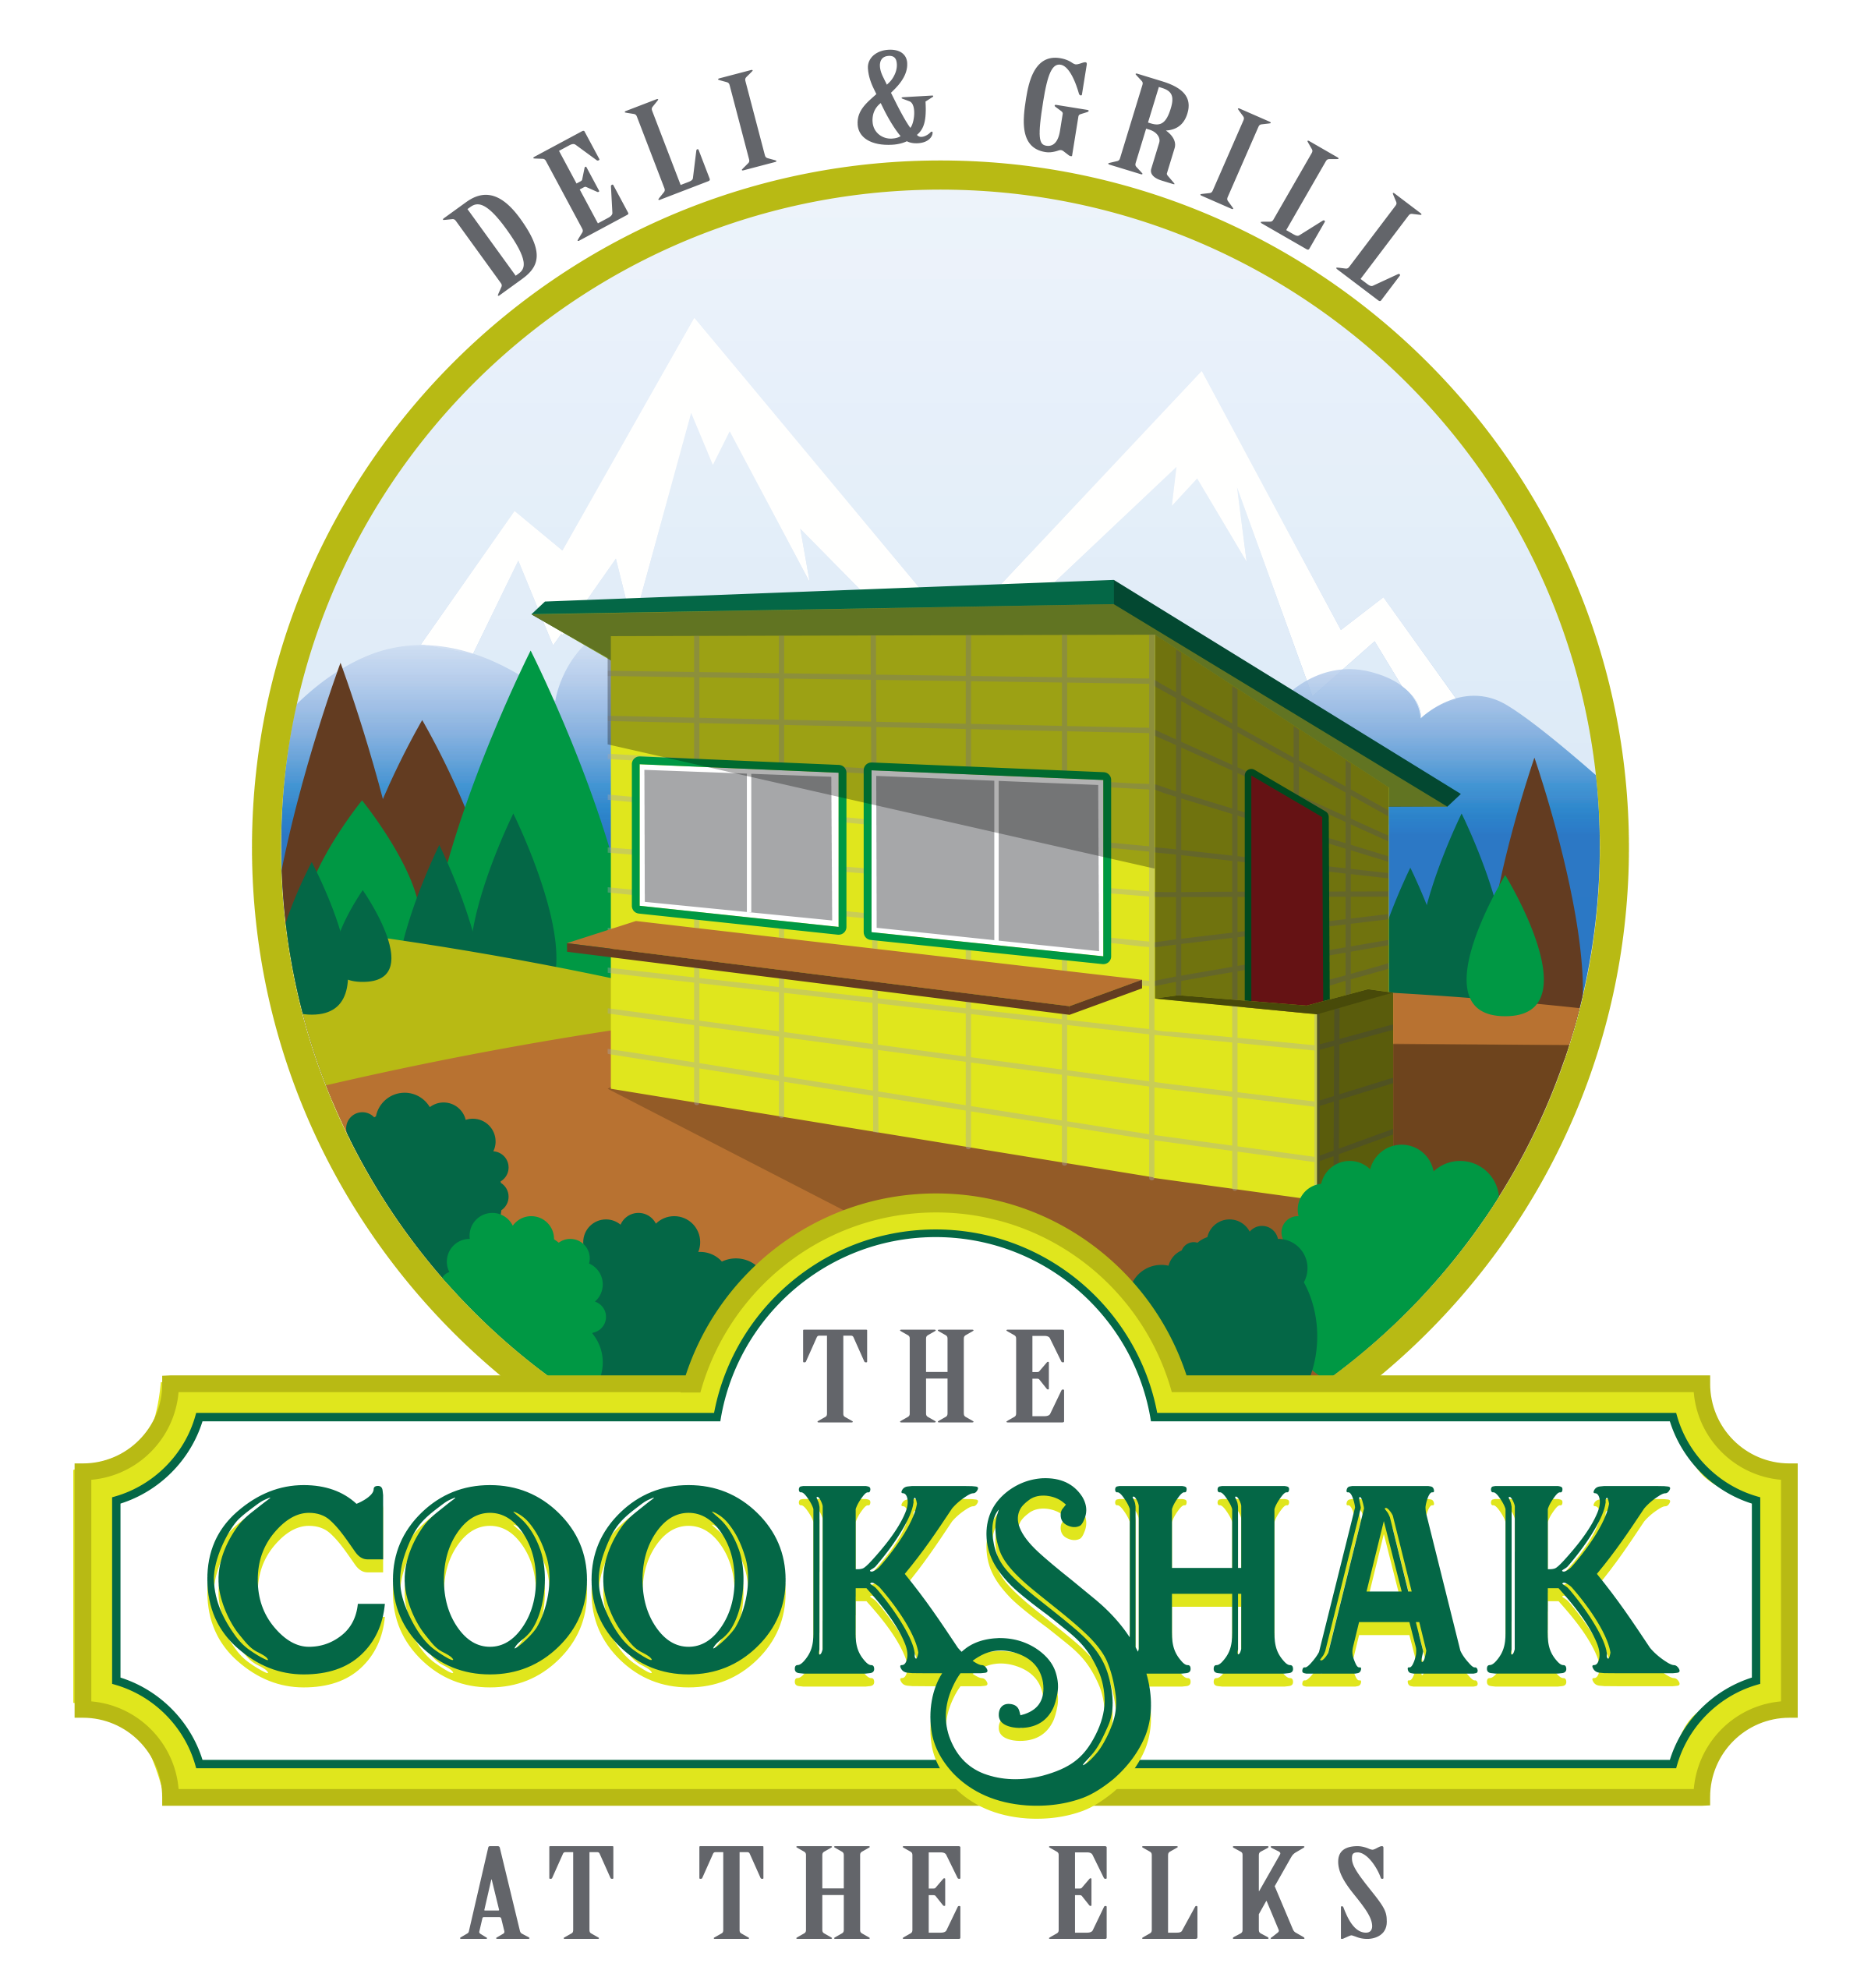 The Cookshak